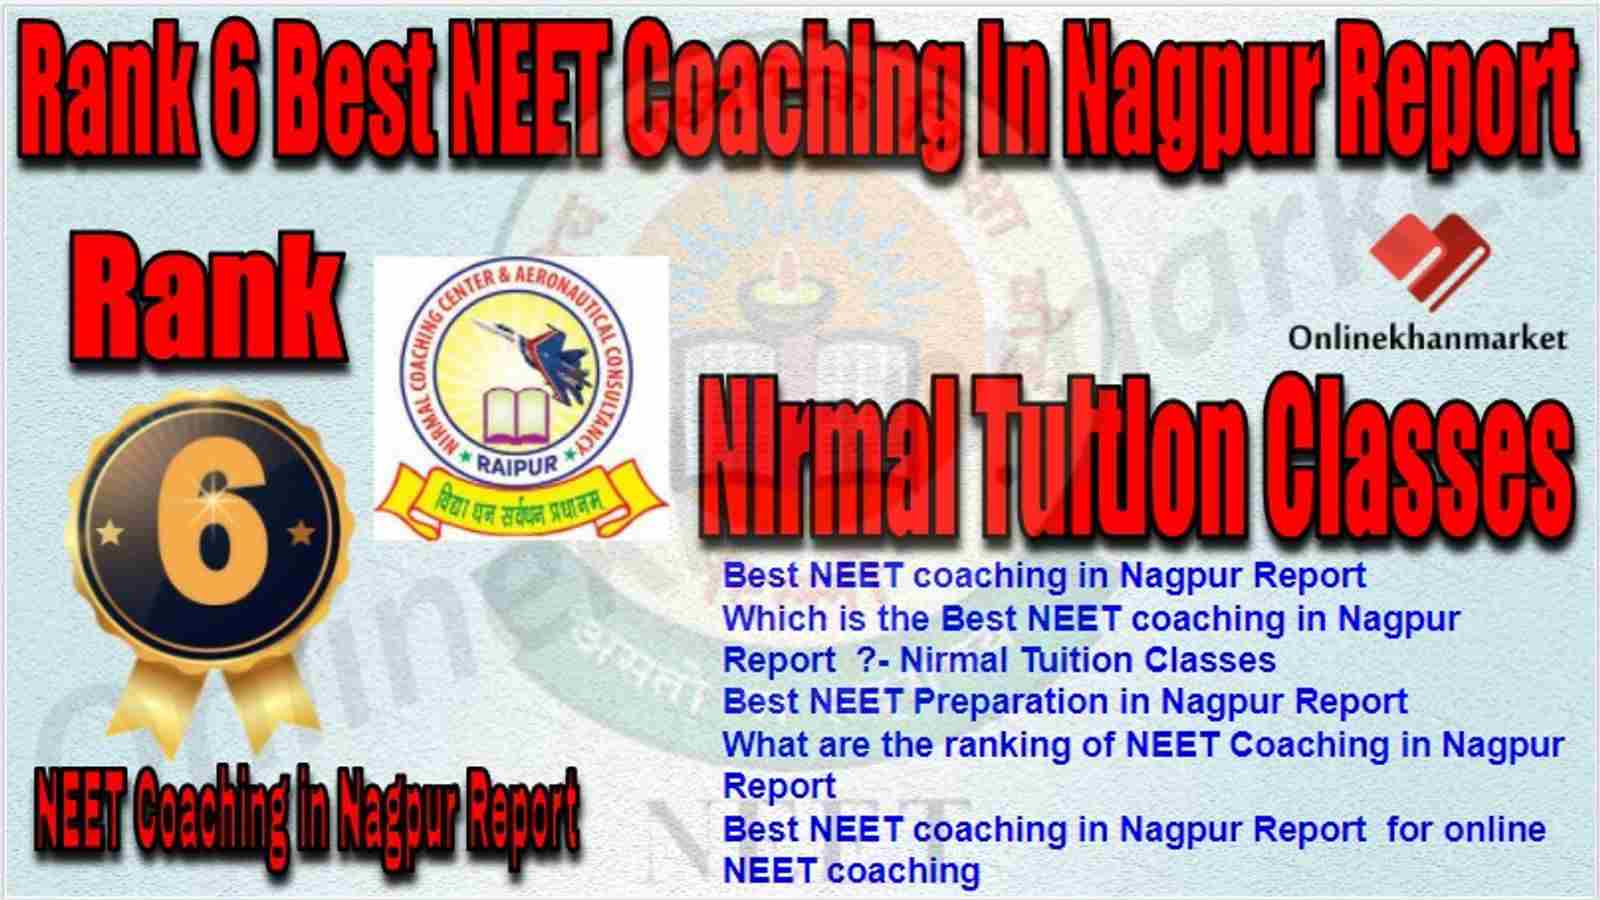 Rank 6 Best NEET Coaching nagpur report